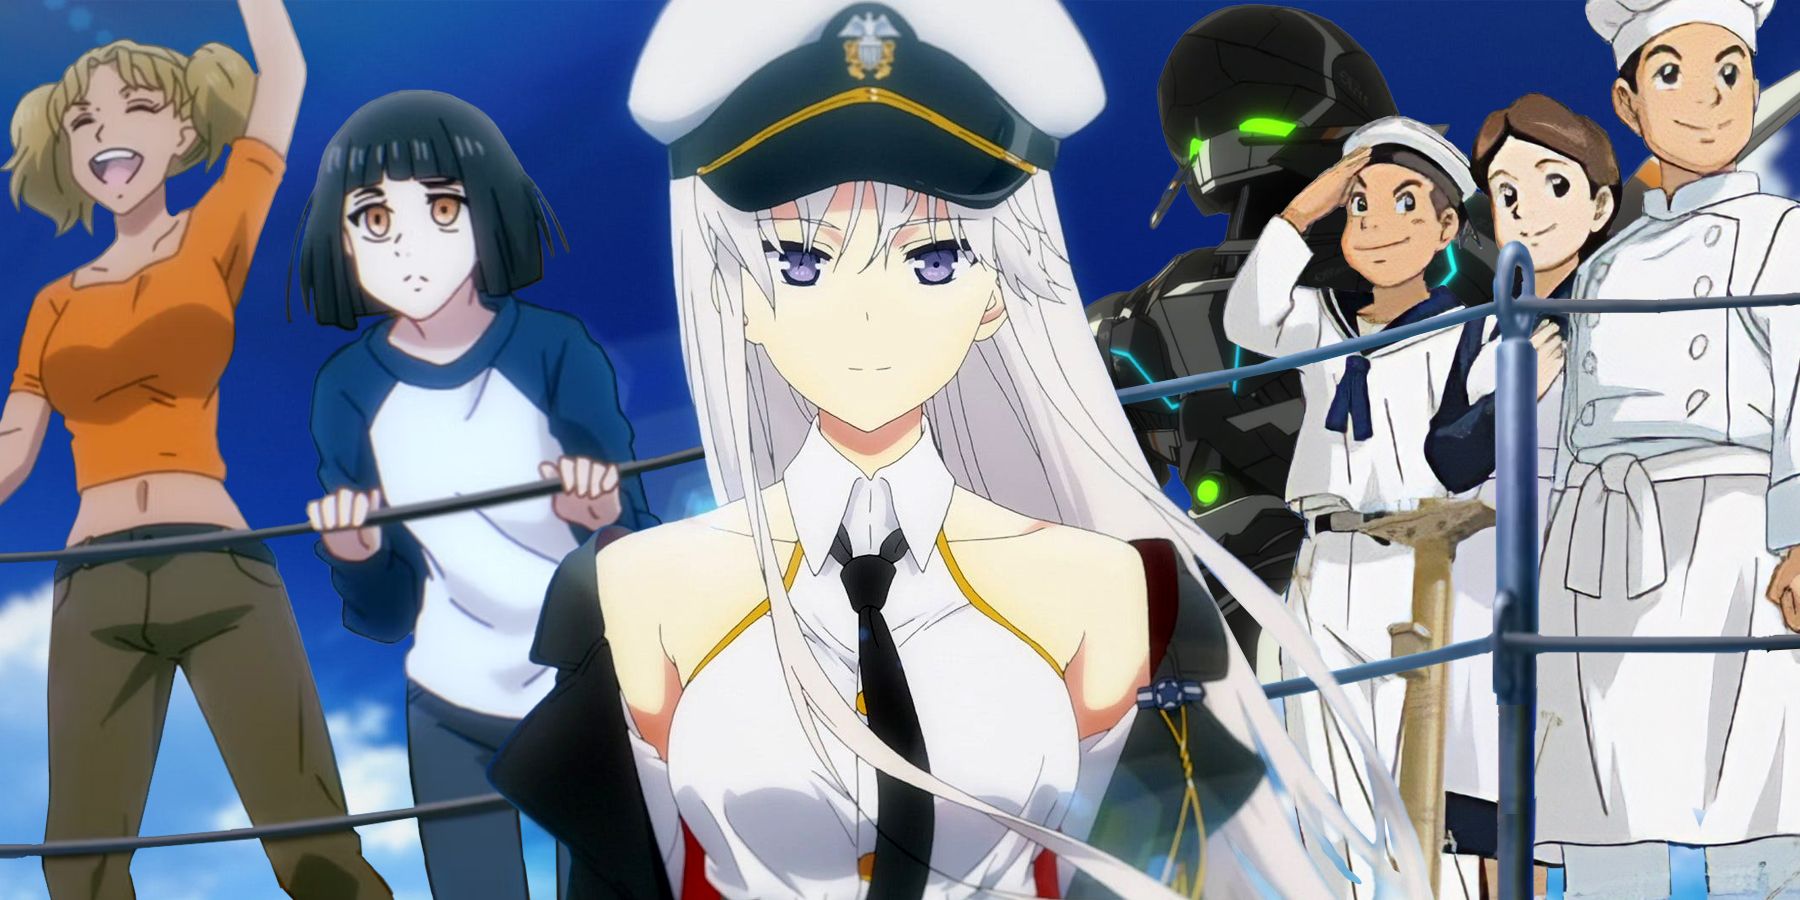 Anime-style depiction of bismarck-class battleship on Craiyon